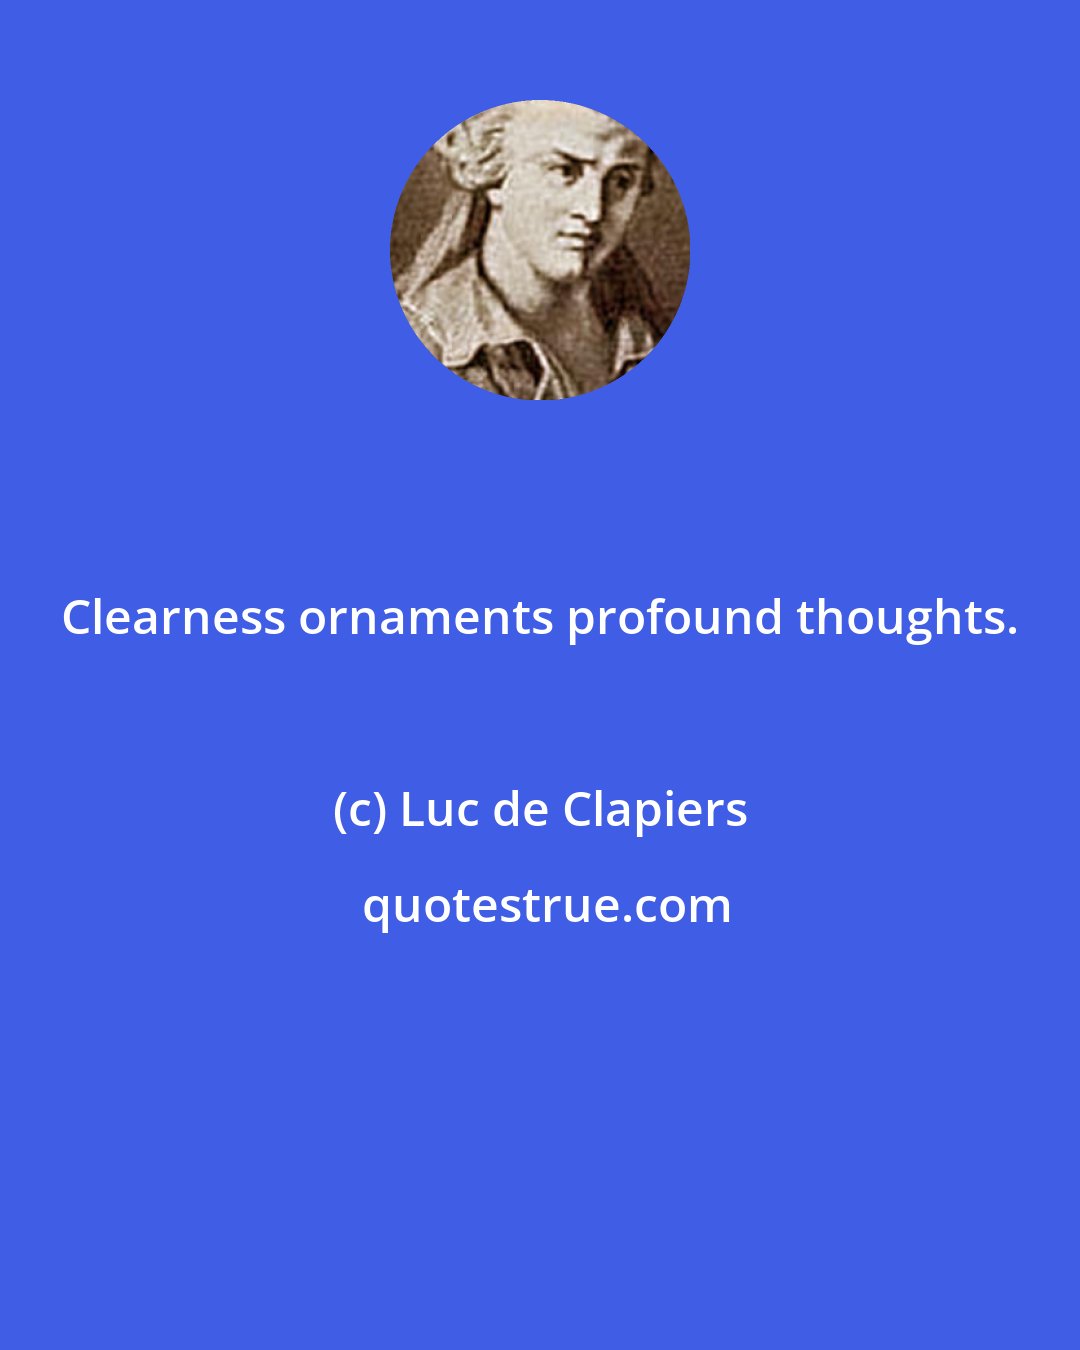 Luc de Clapiers: Clearness ornaments profound thoughts.